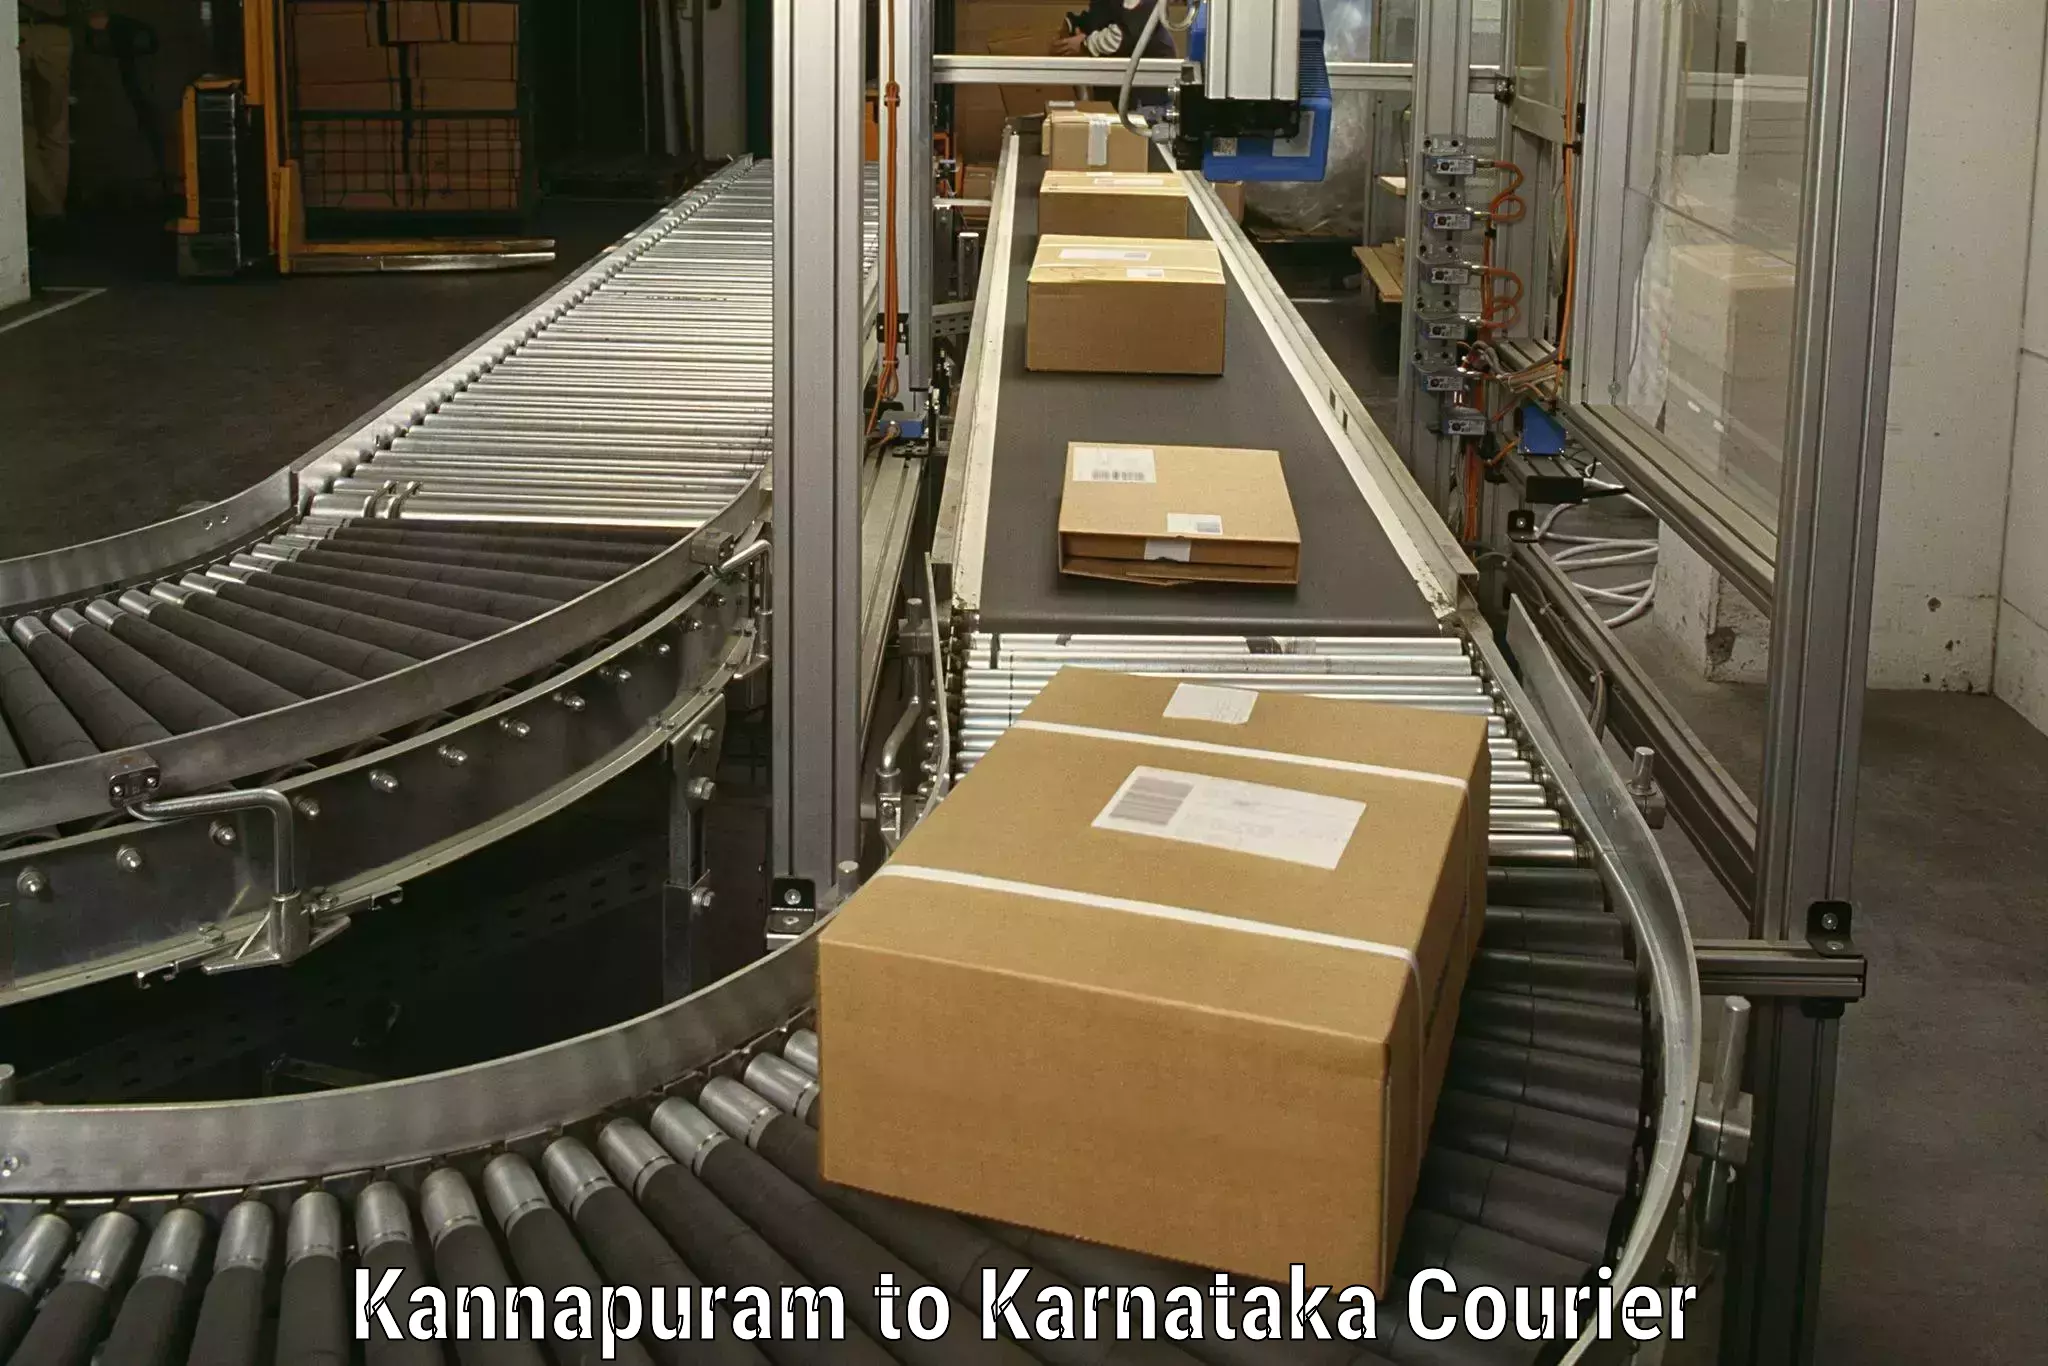 Trusted relocation experts Kannapuram to Chikkamagaluru